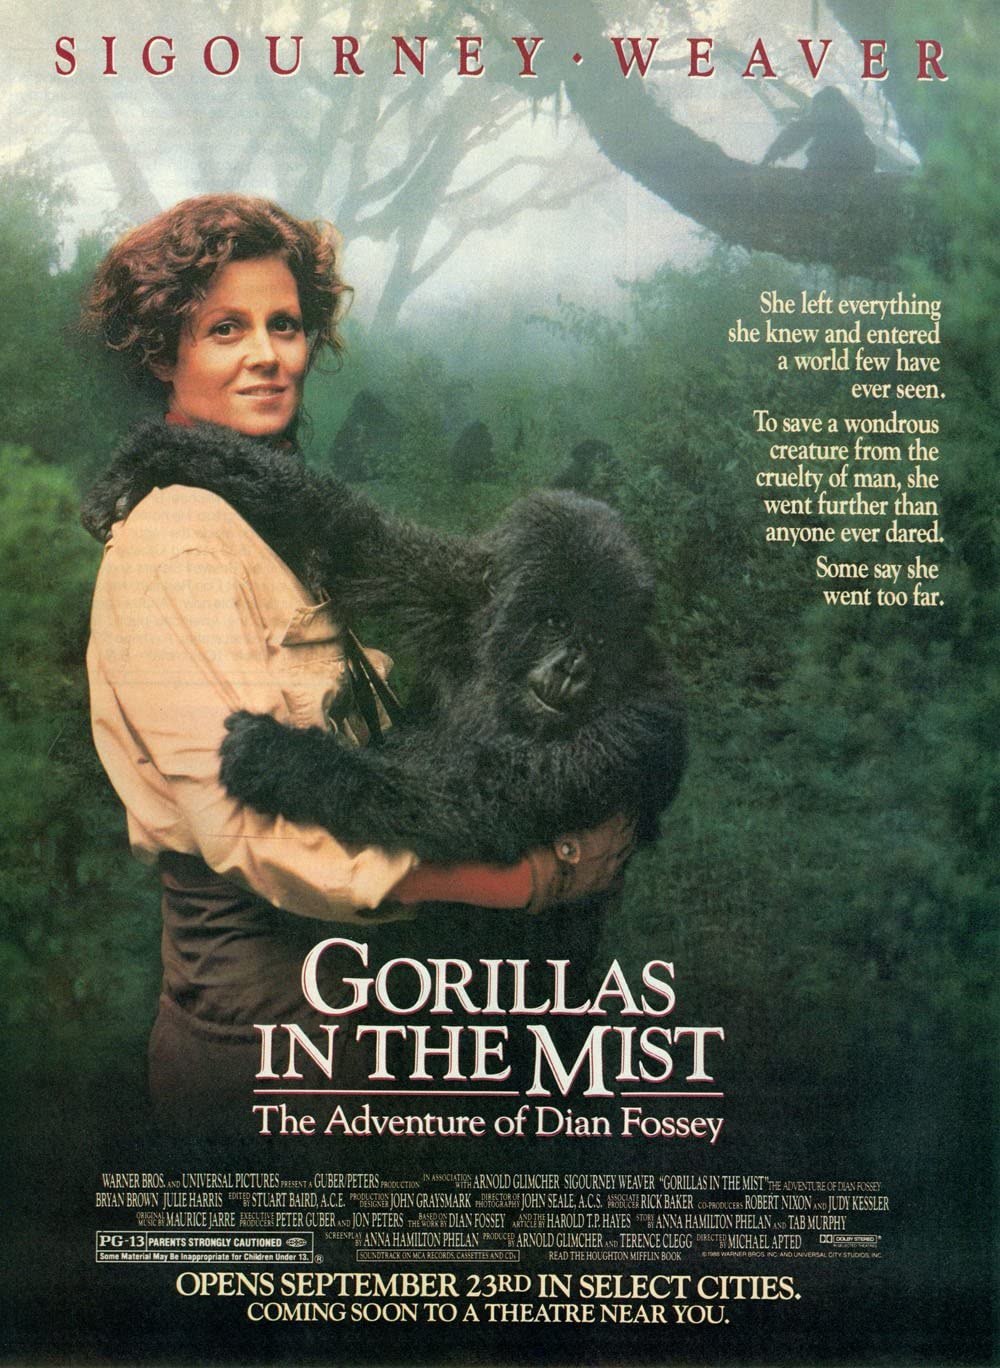 Filmbeschreibung zu Gorillas in the Mist: The Story of Dian Fossey